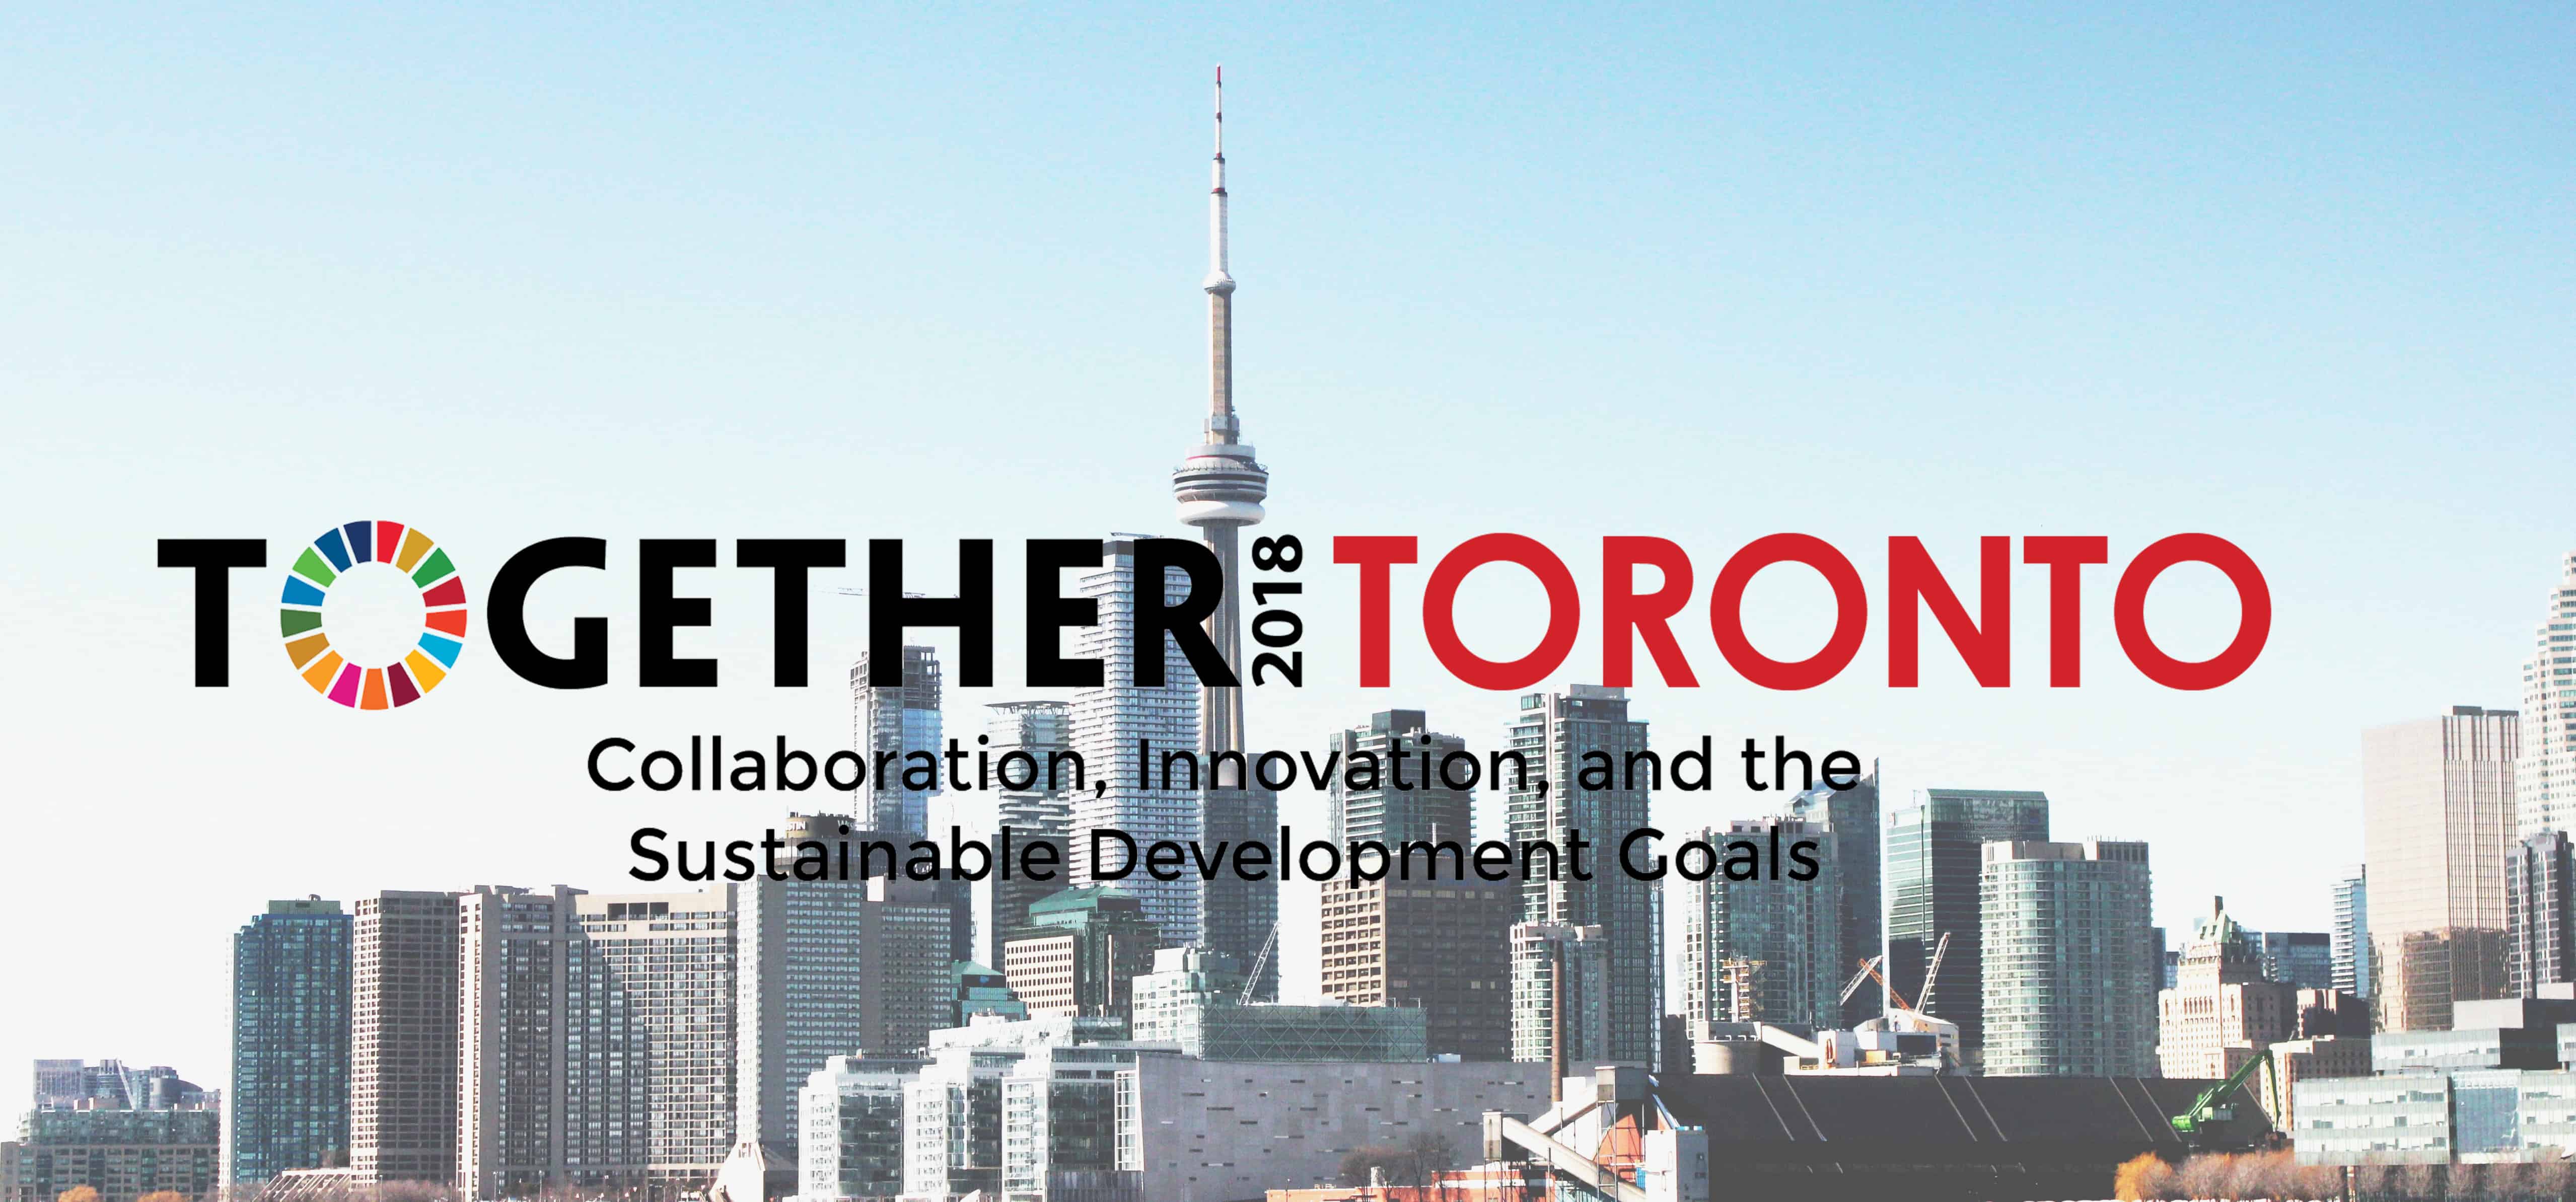 Together2018 banner with Toronto skyline